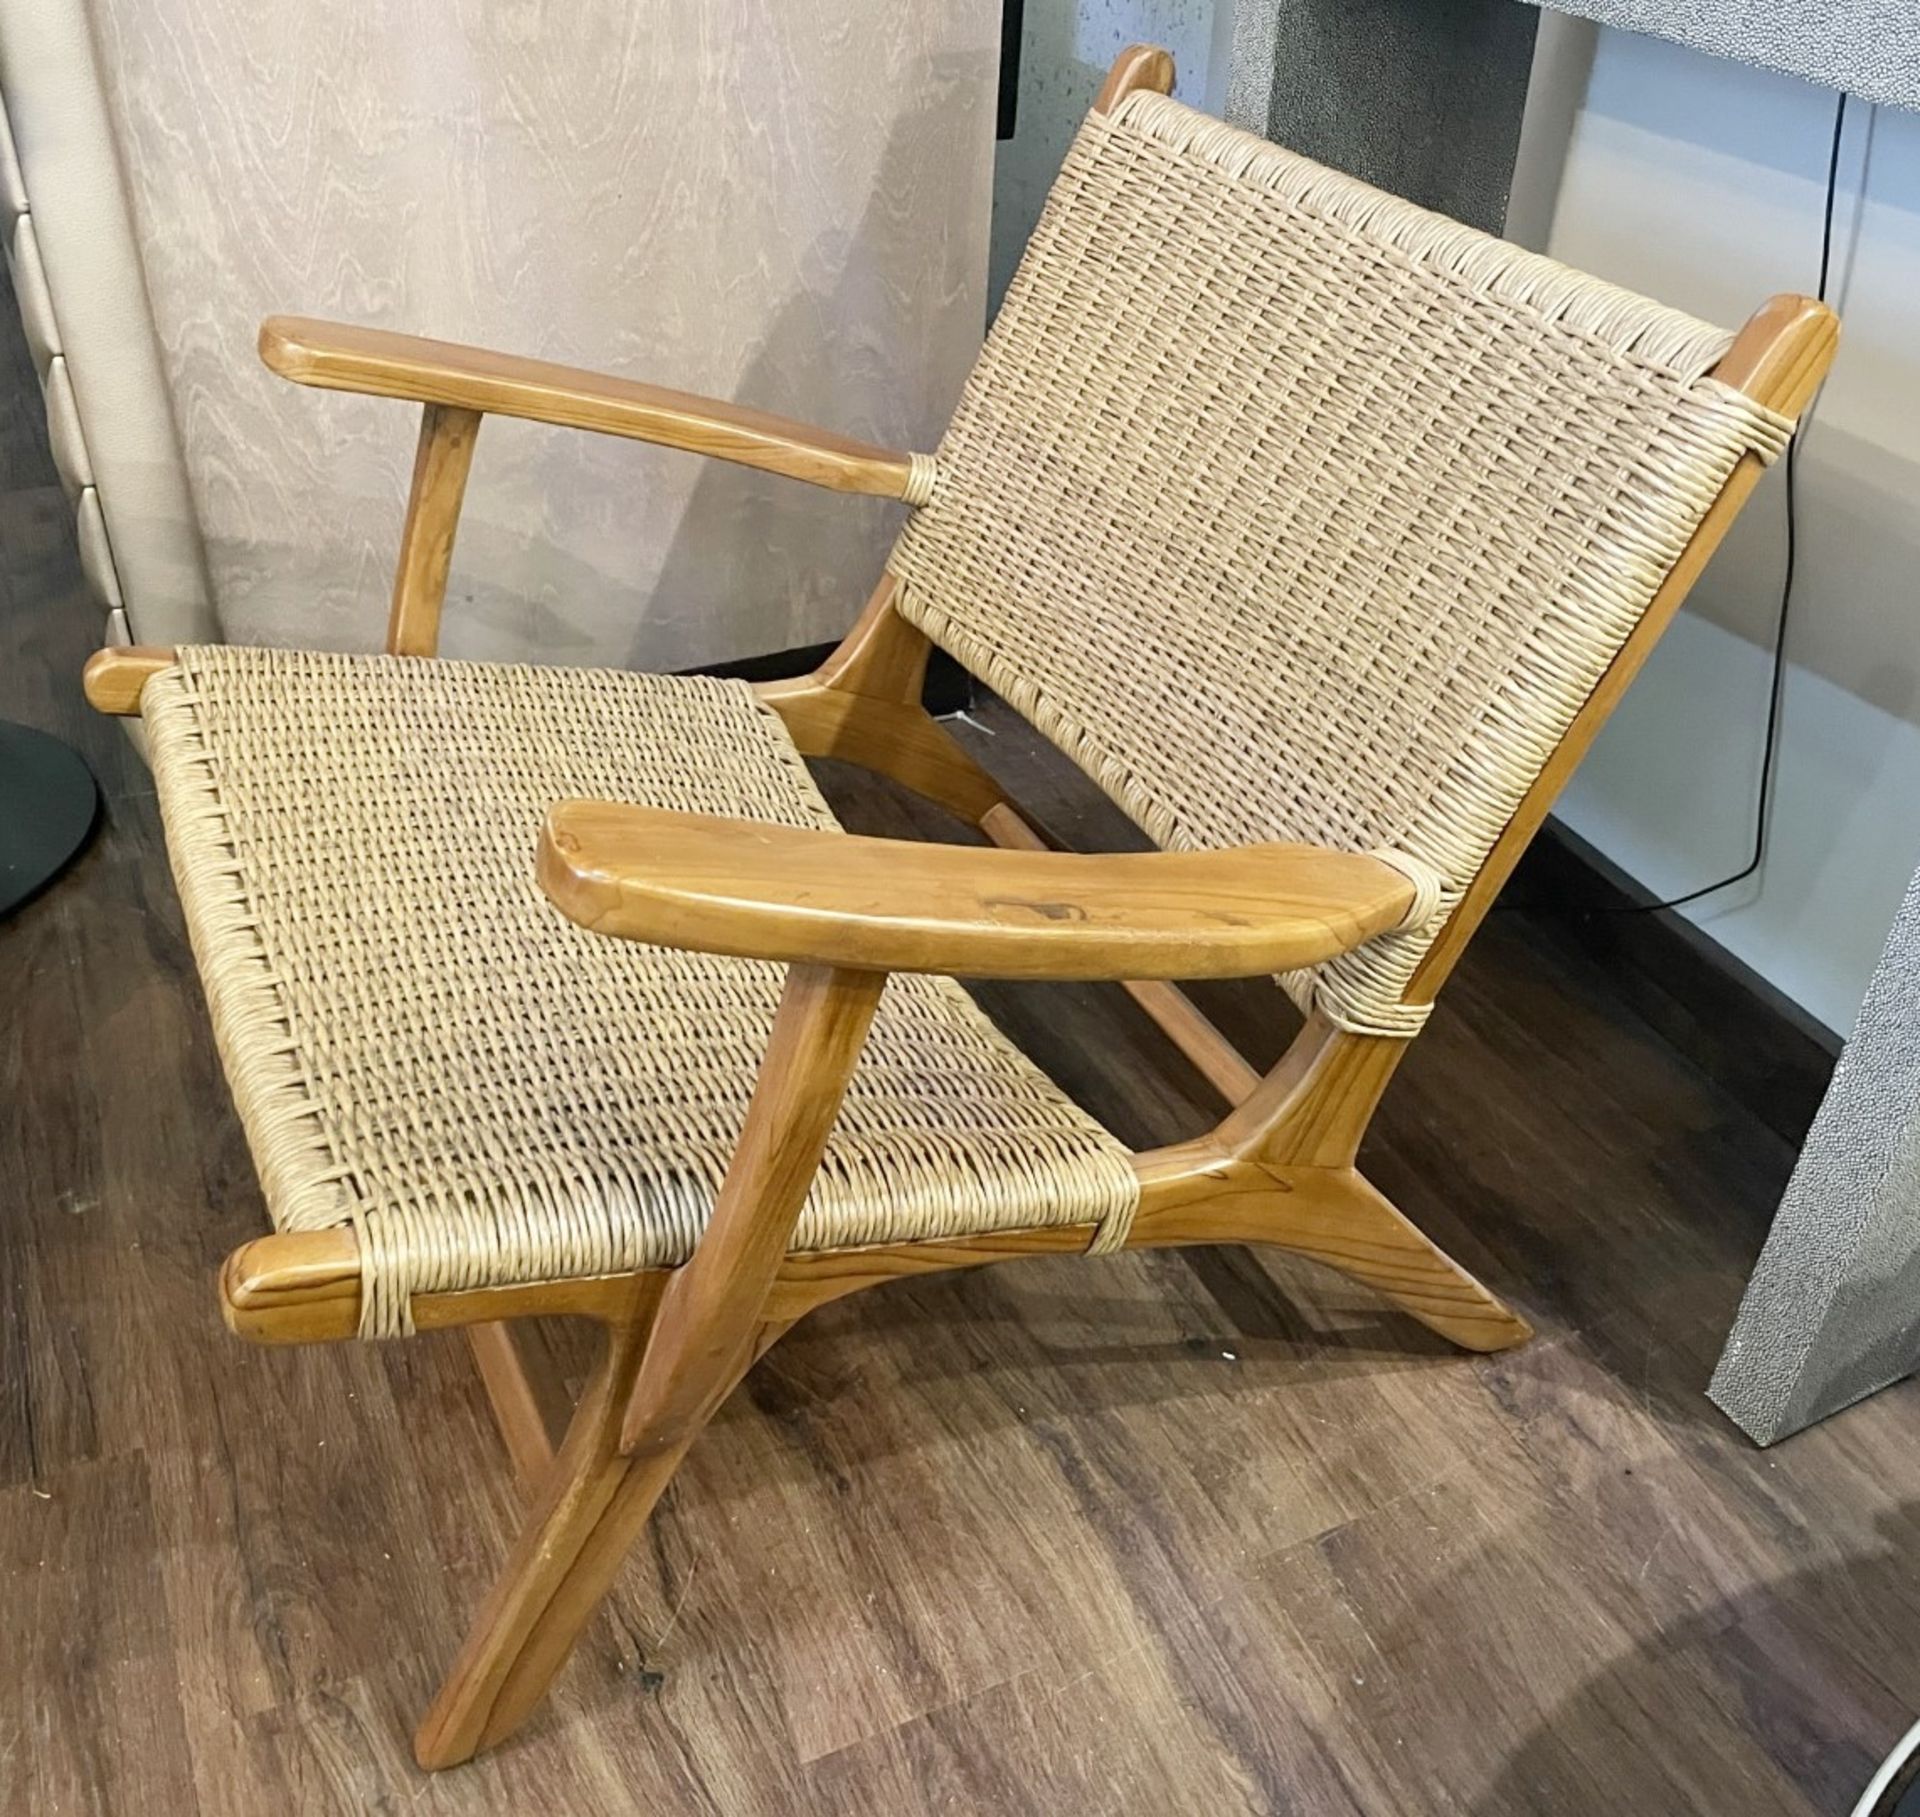 1 x 'Sloane' Stylish Rattan Occasional Chair - Image 2 of 10